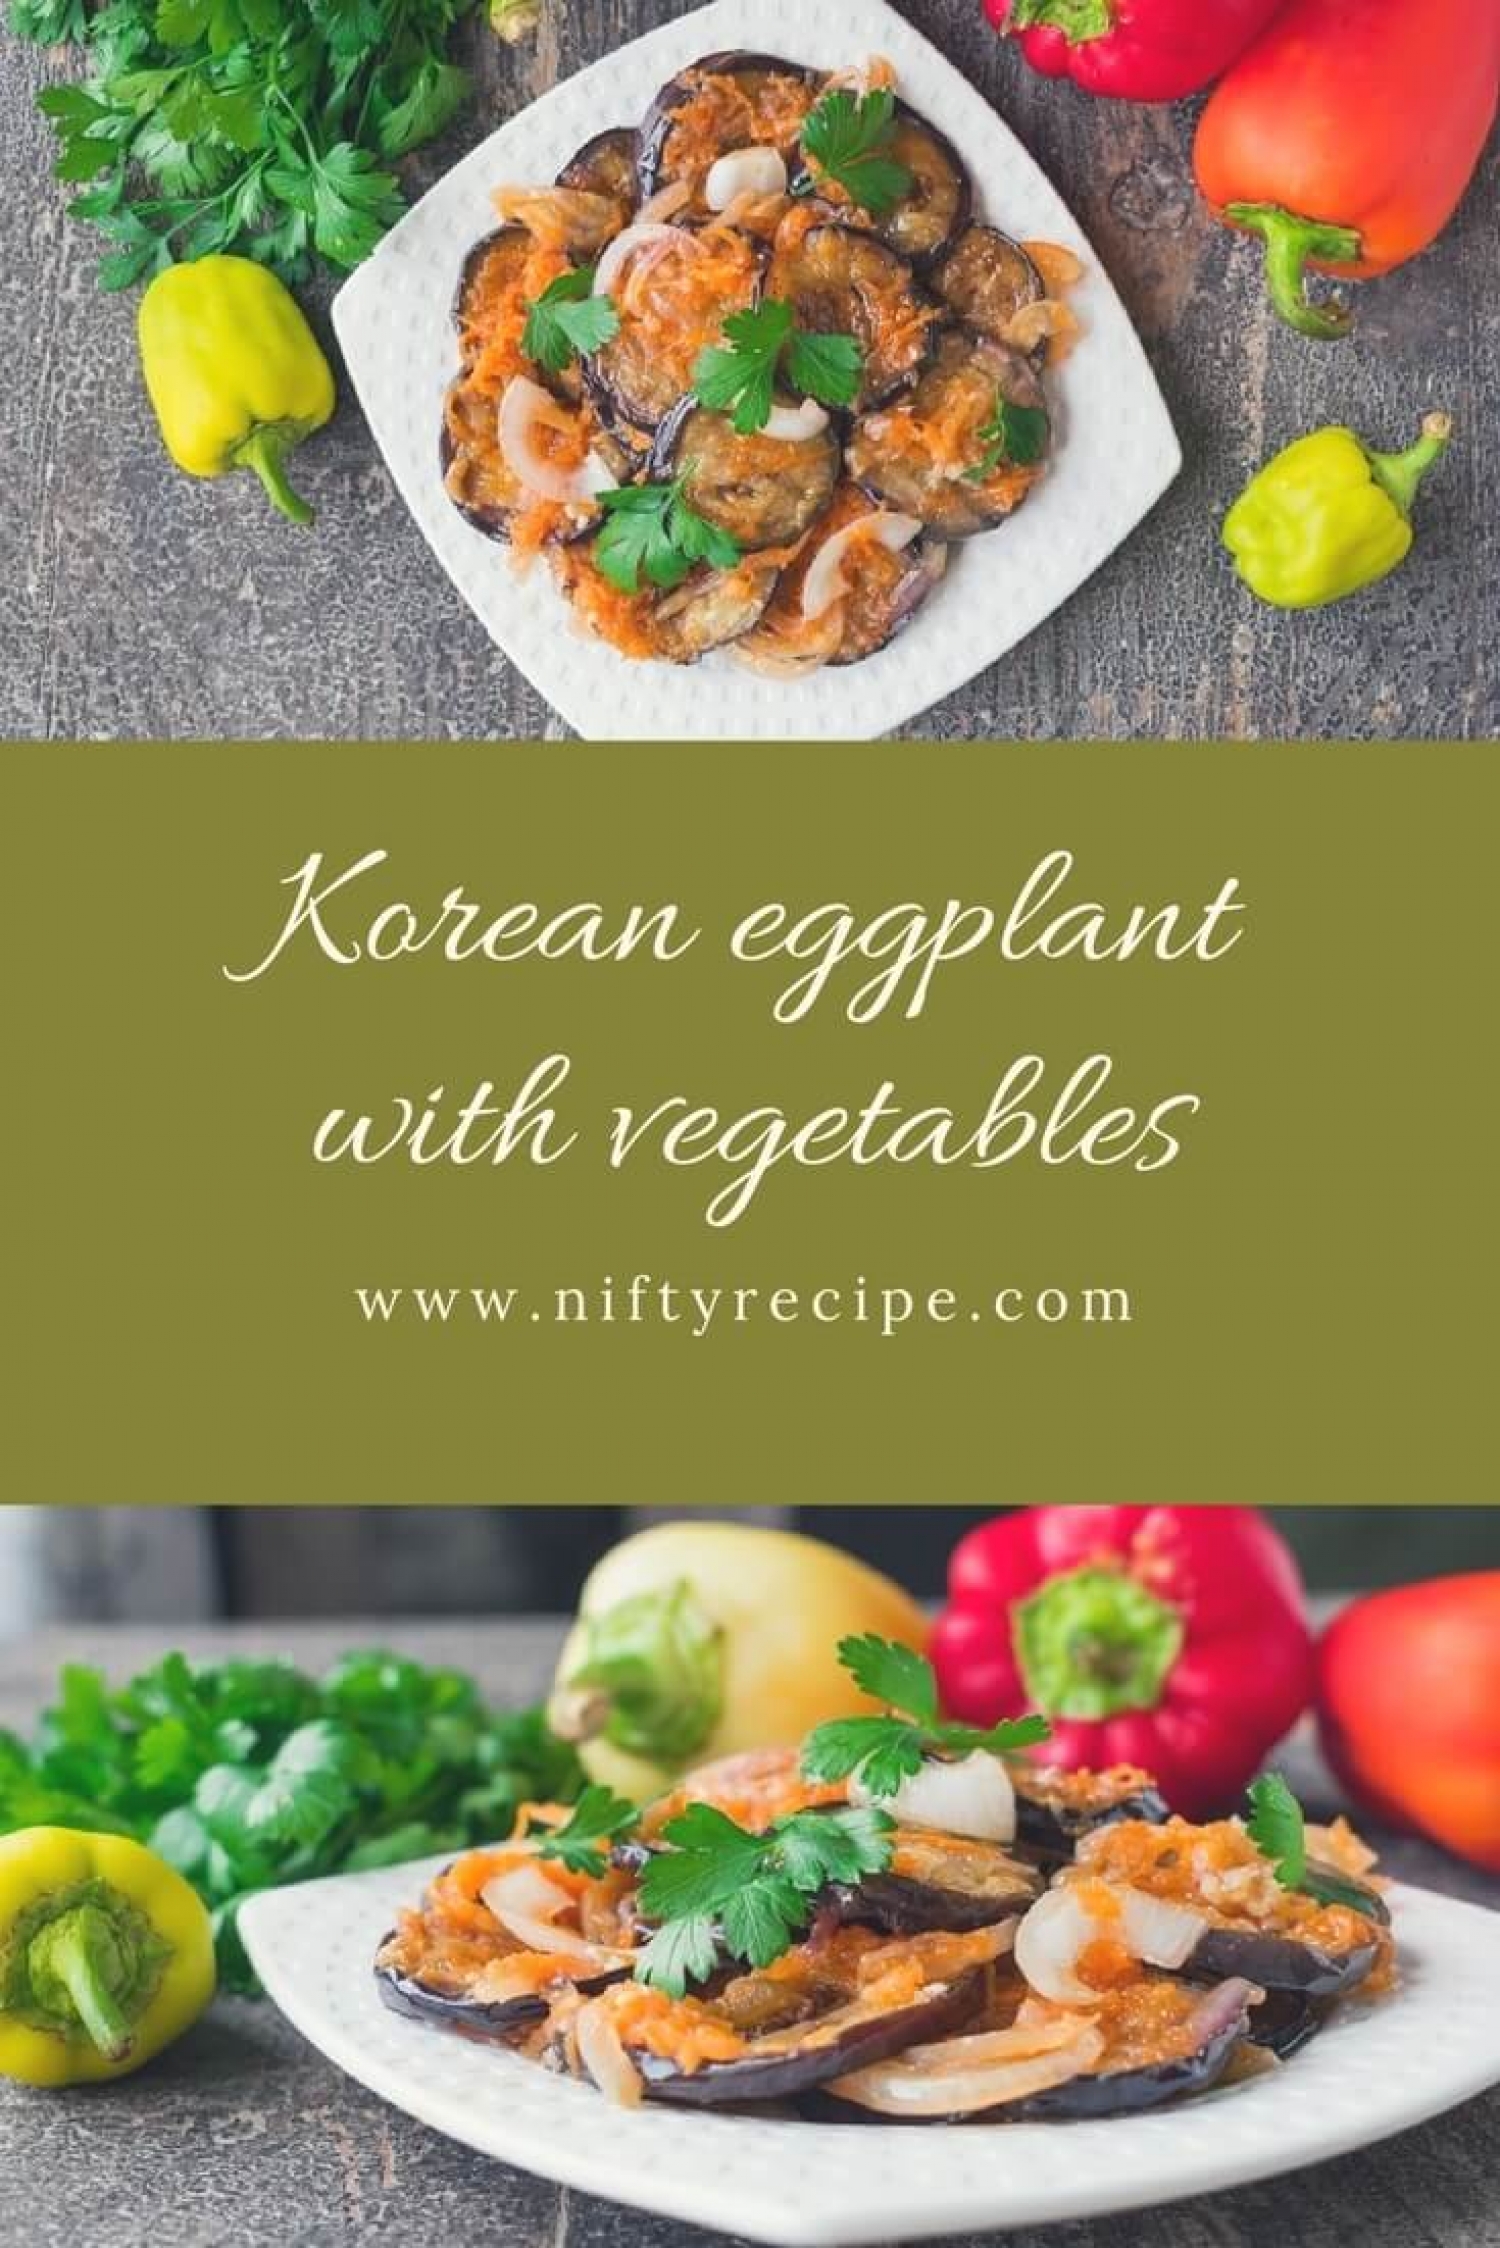 Korean eggplant with vegetables